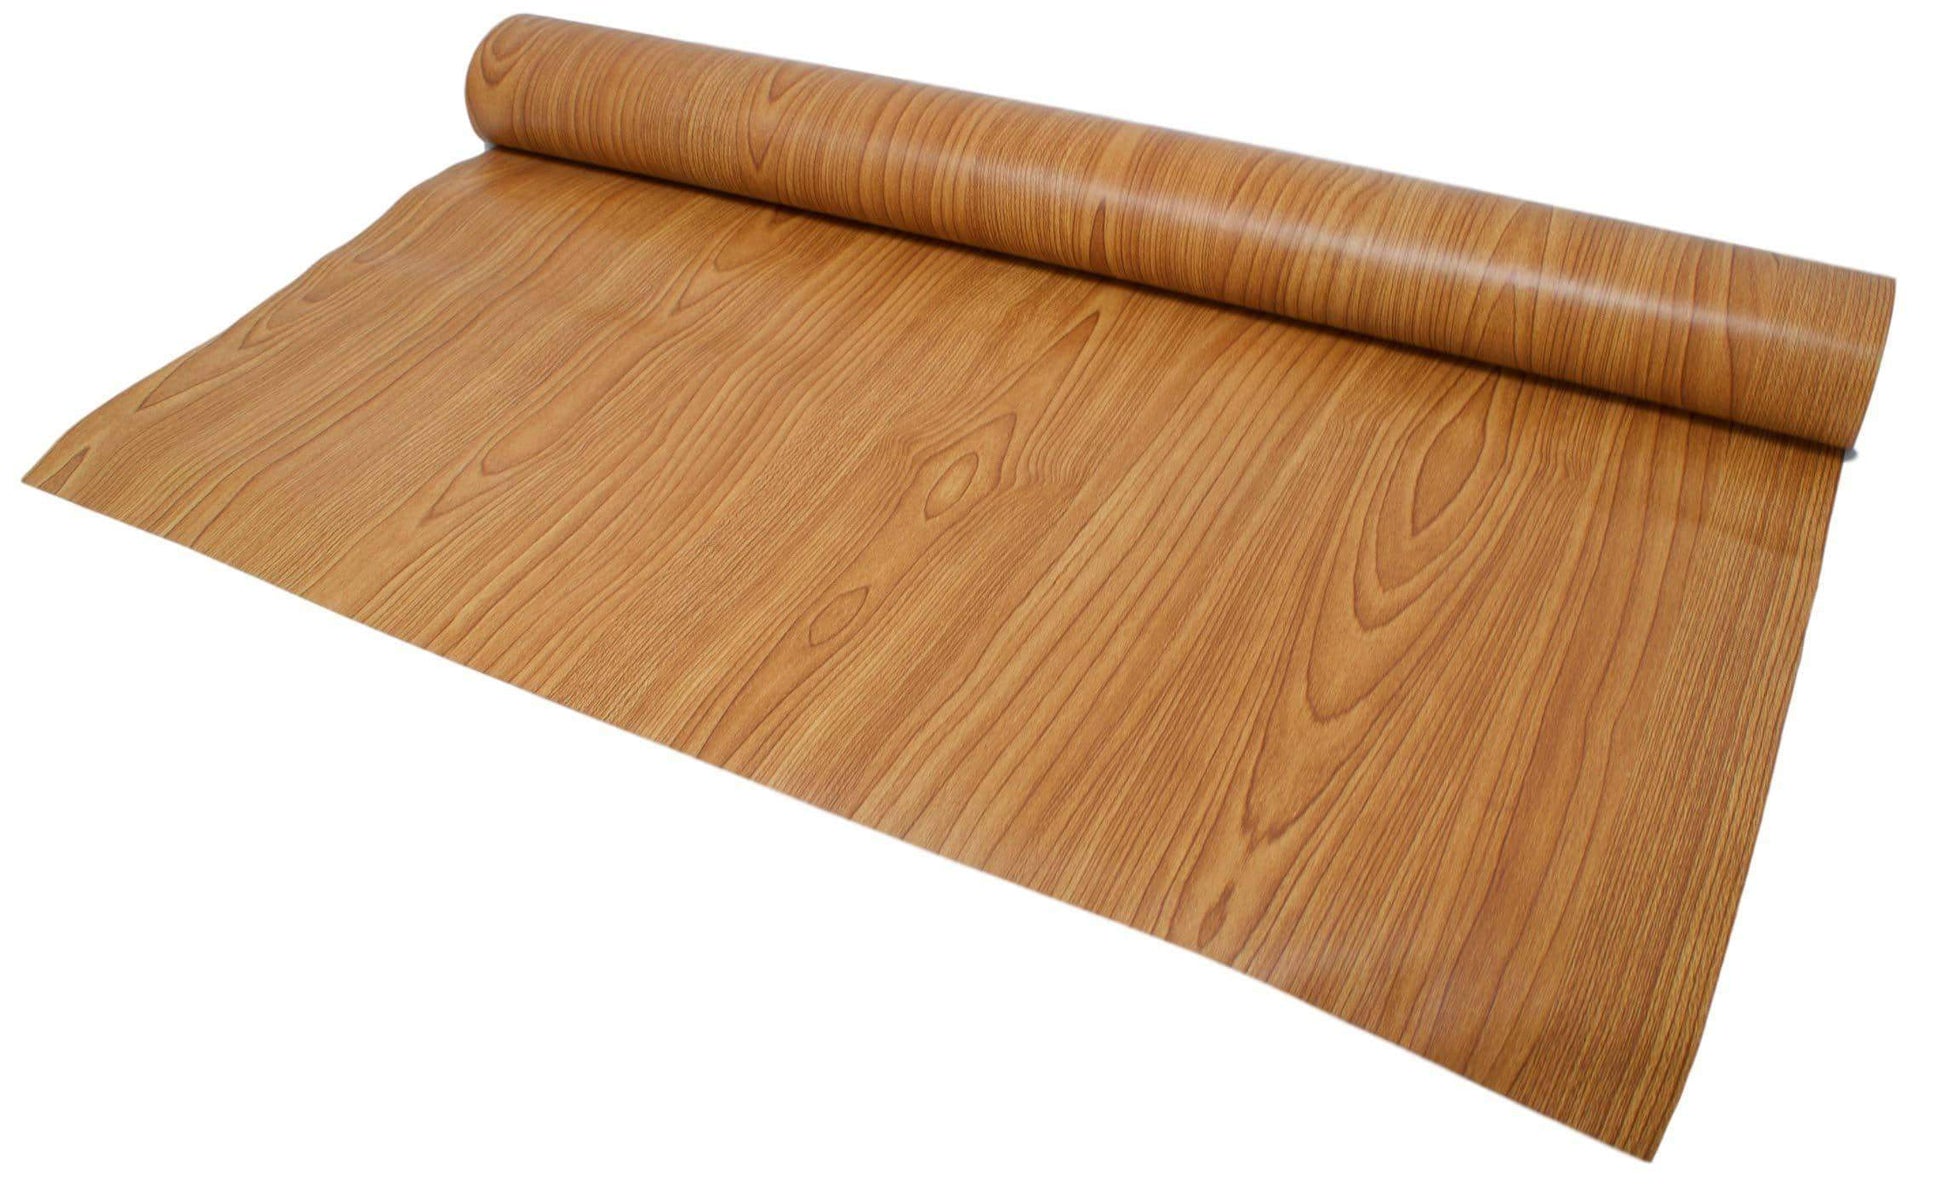 2 Rolls Drawer Shelf Liner Self Adhesive Cover Wood Grain Design Contact Paper